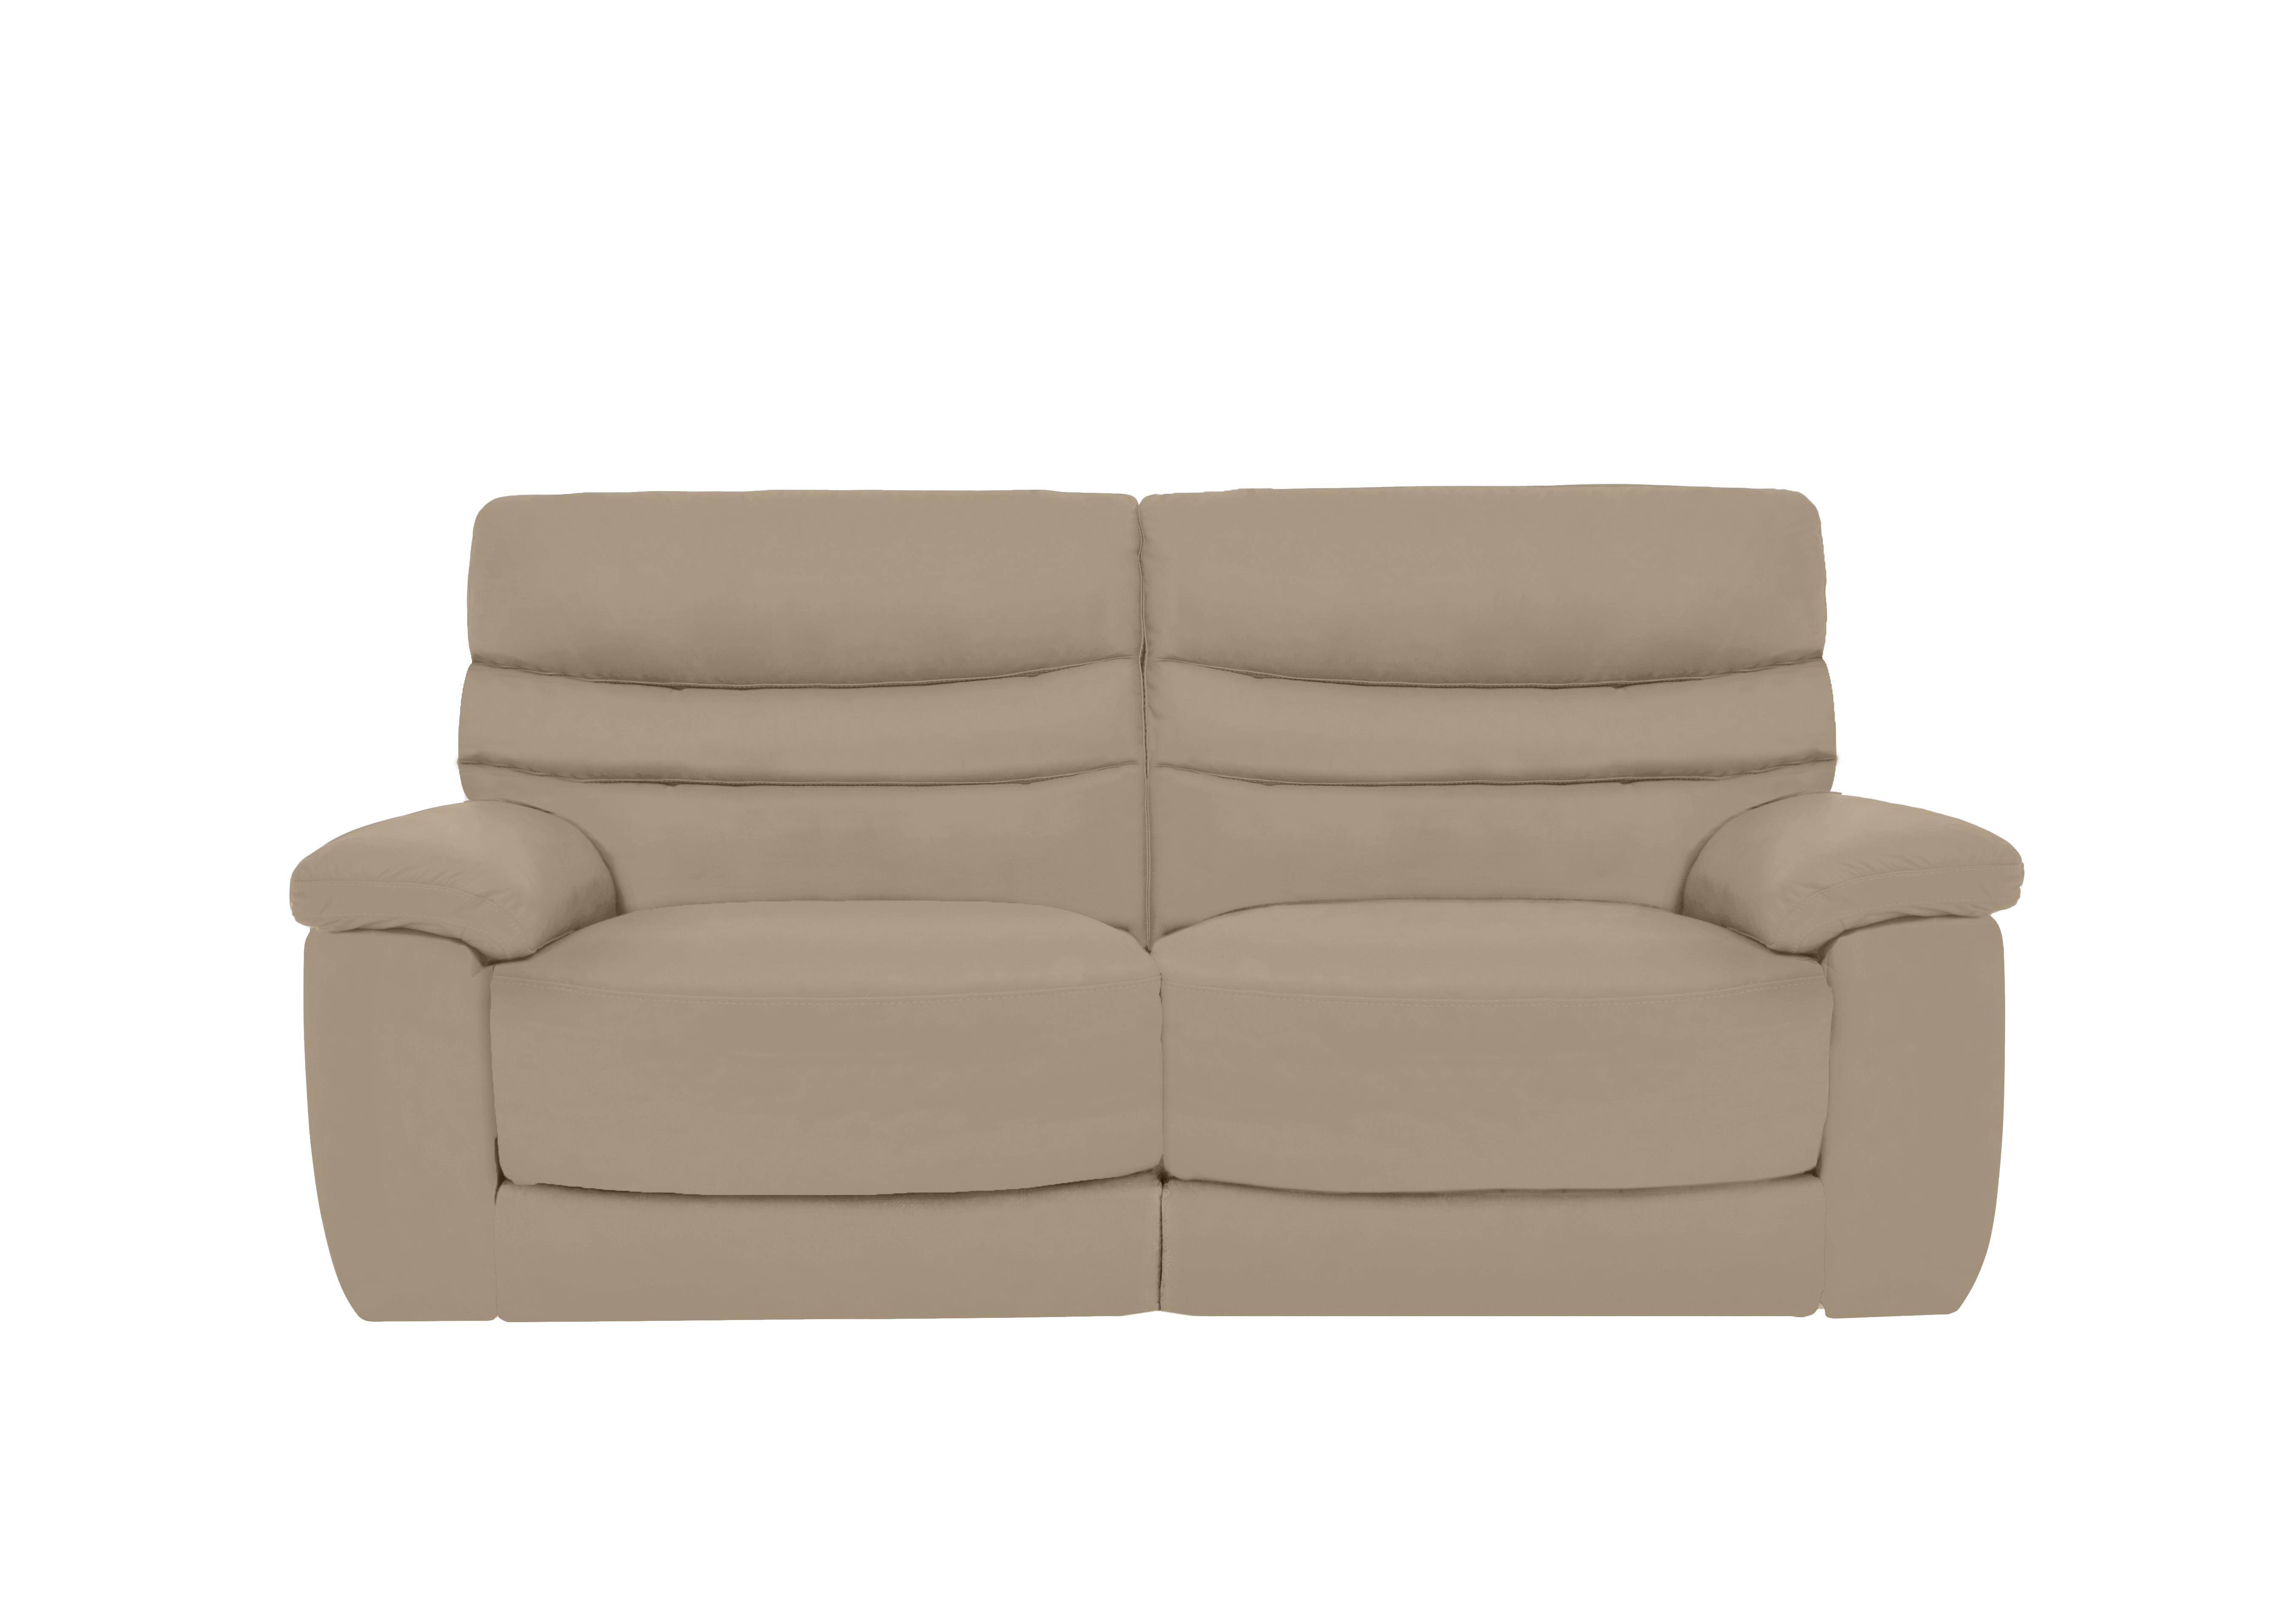 Nimbus 3 Seater Leather Sofa in Bx-039c Pebble on Furniture Village